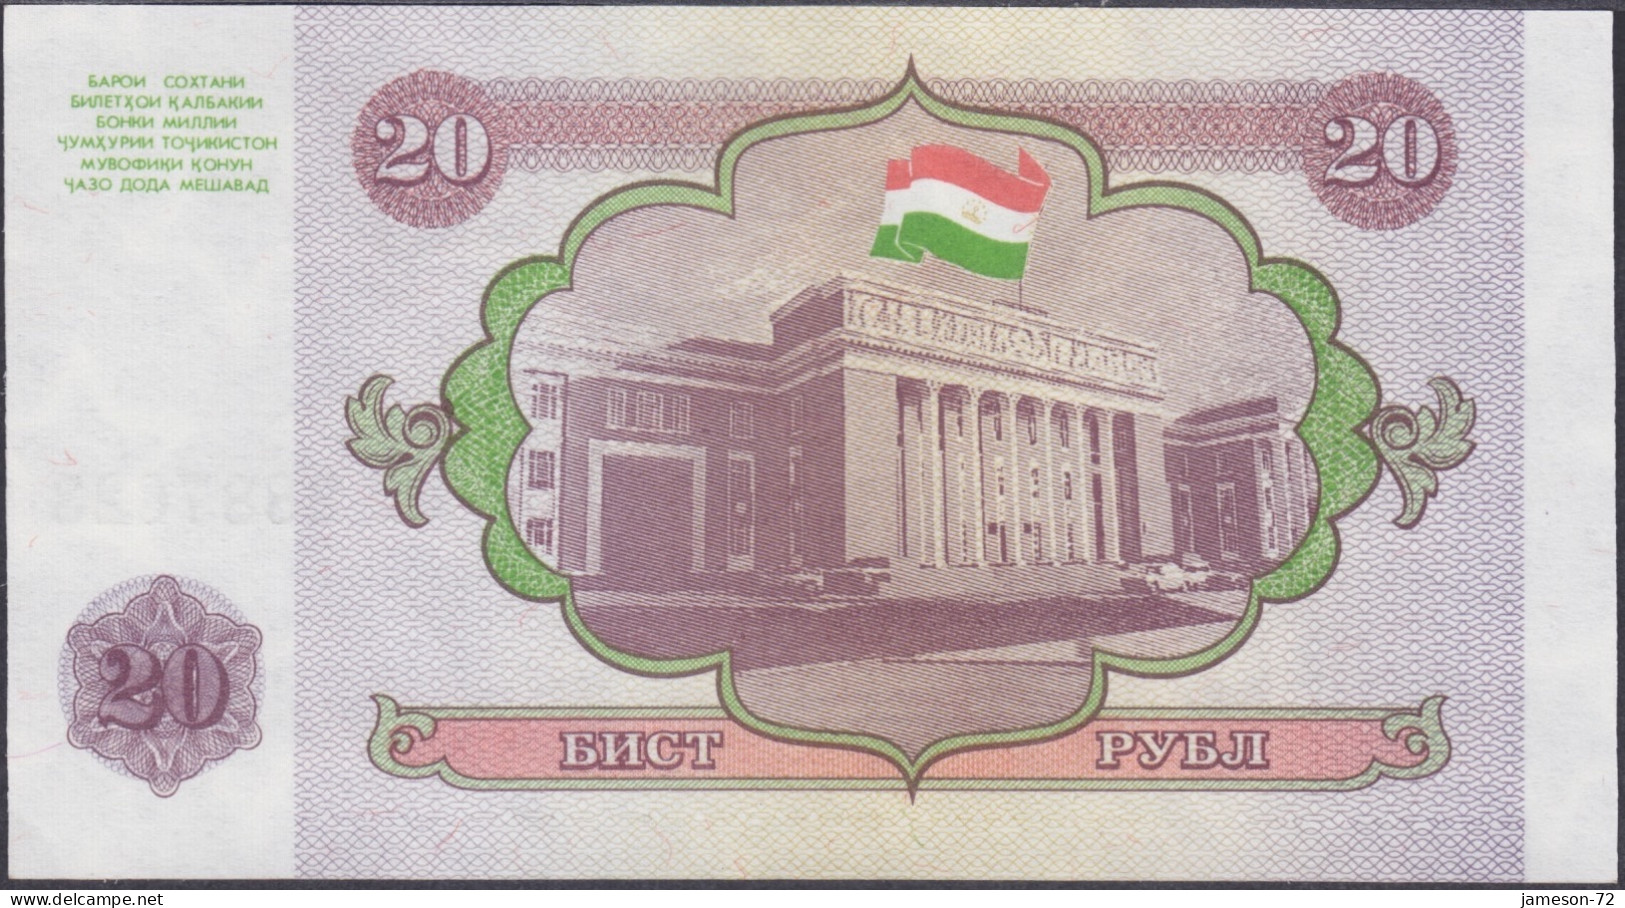 TAJIKISTAN - 20 Rubles 1994 P# 4 Asia Banknote - Edelweiss Coins - Tajikistan